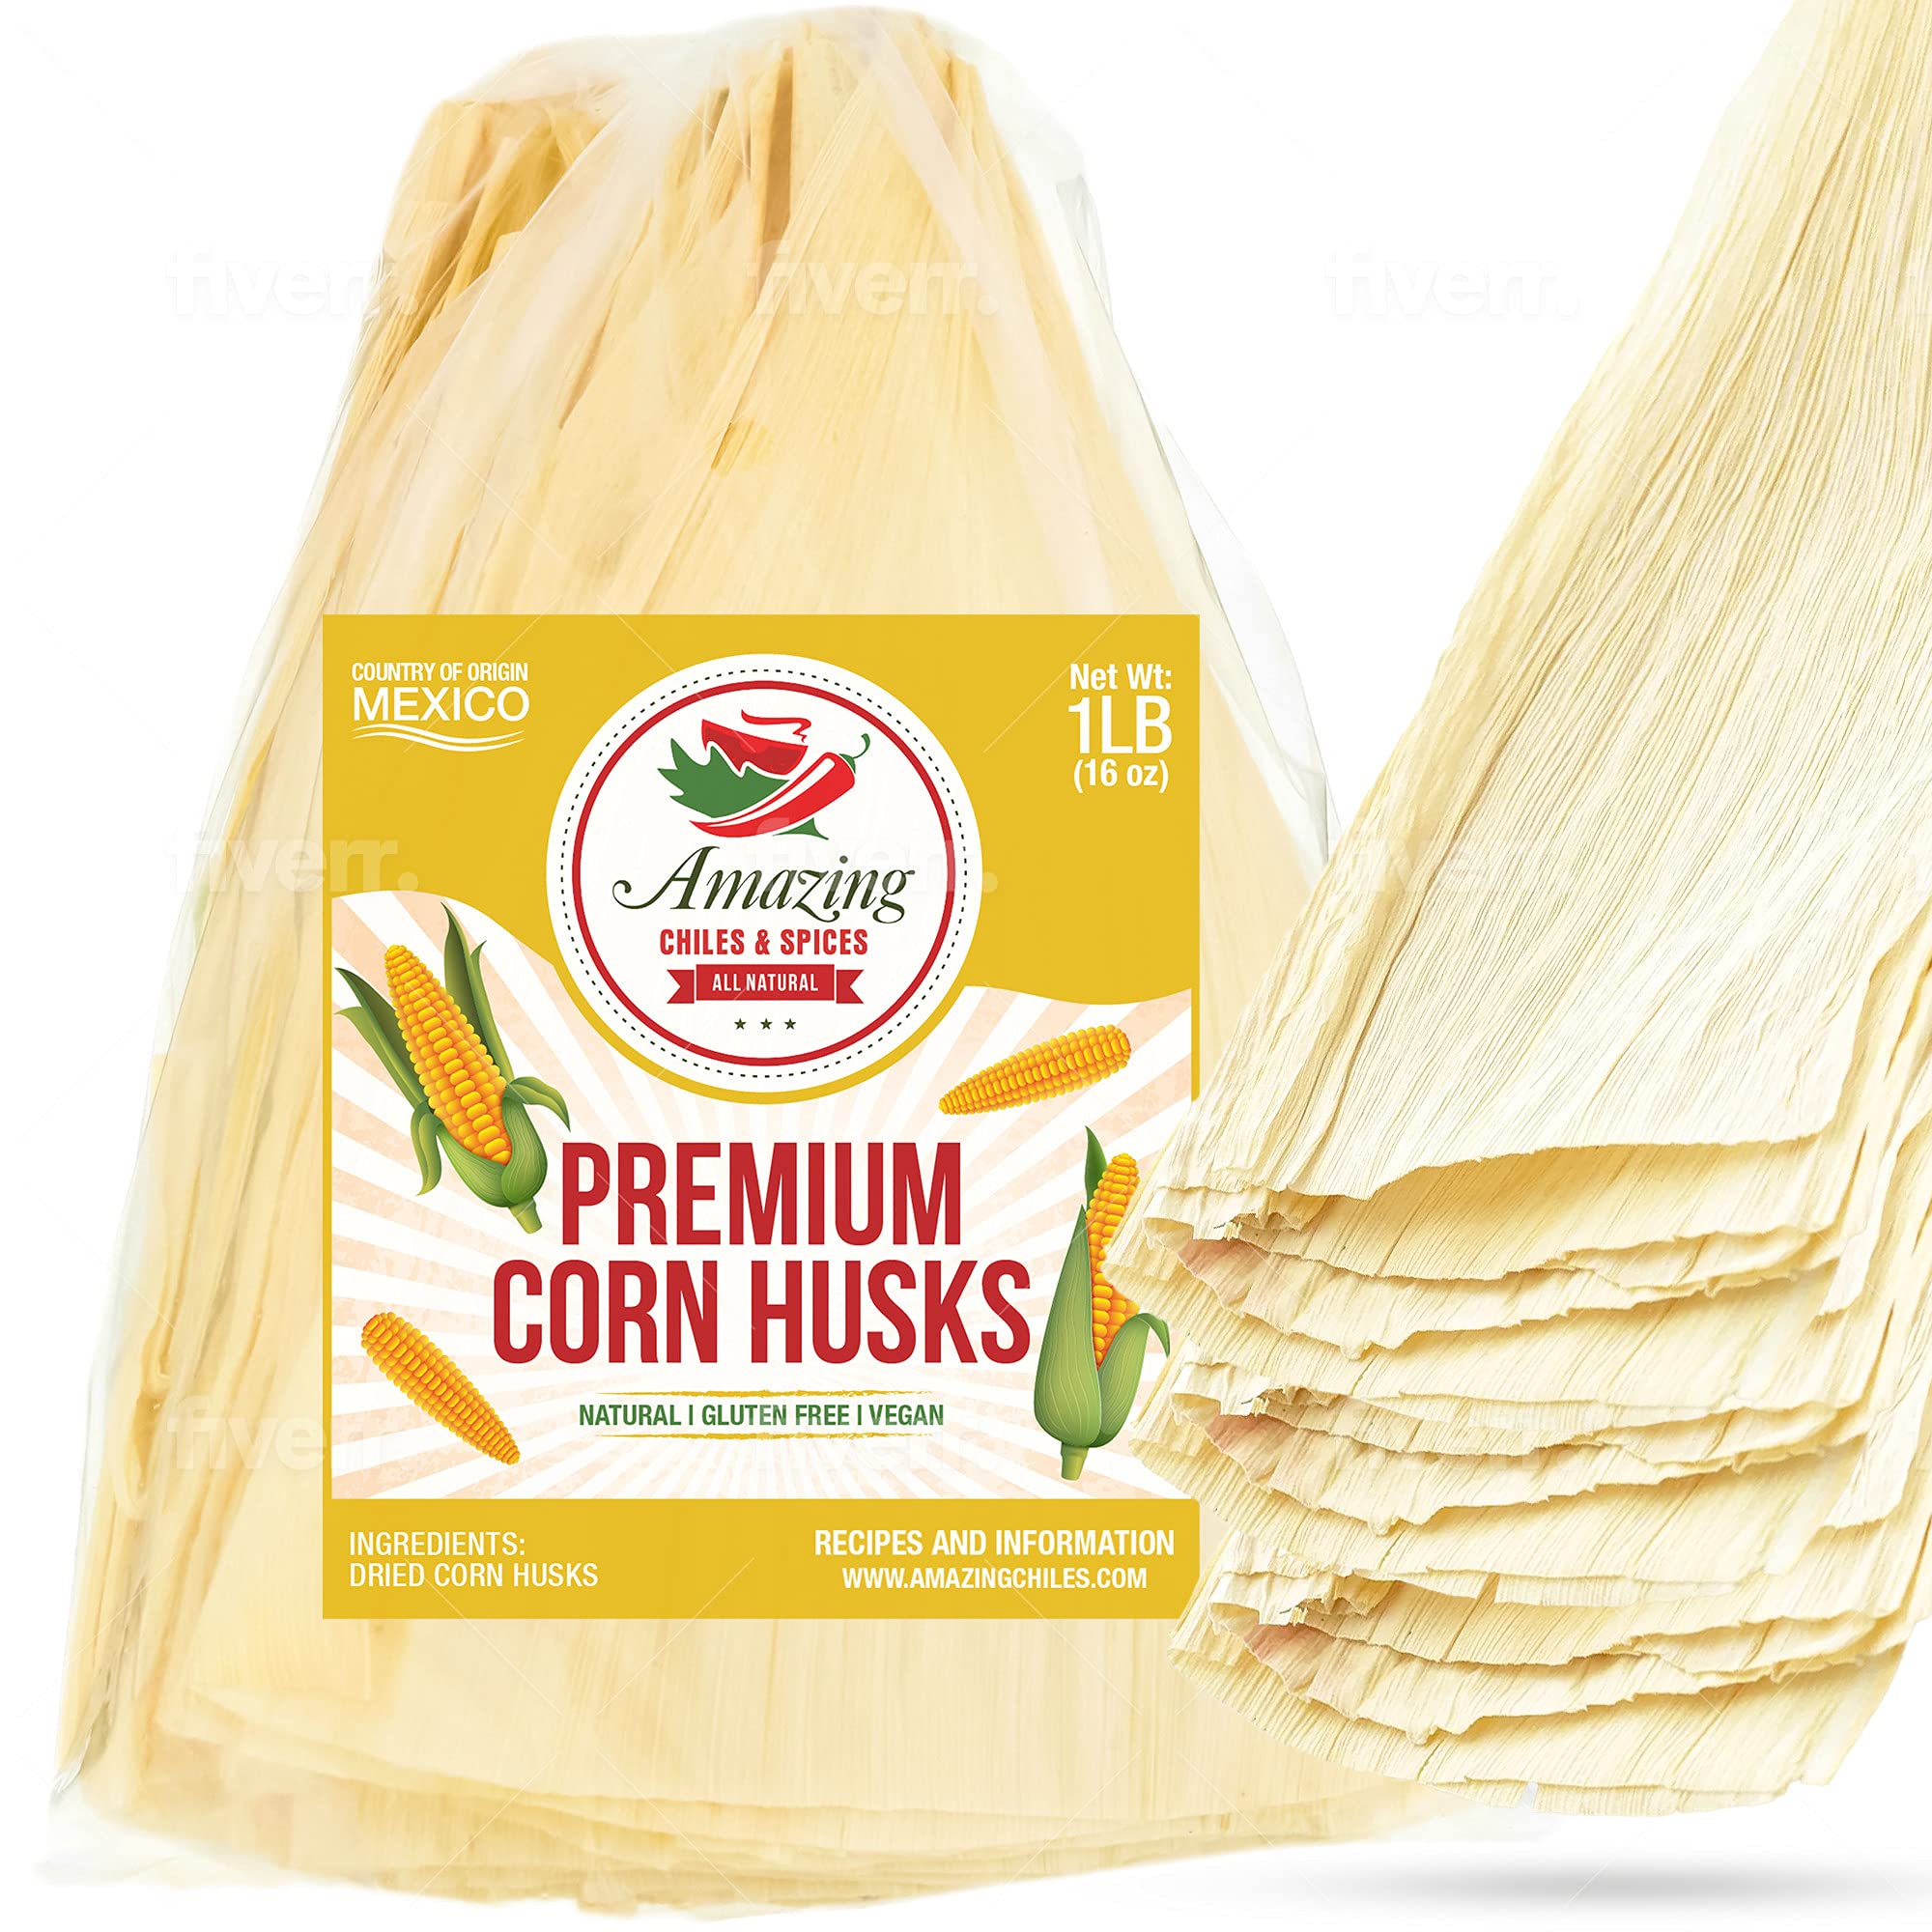 Premium Corn Husks 1 Lb Hoja Para Tamal Super Selecta 1 Libra 